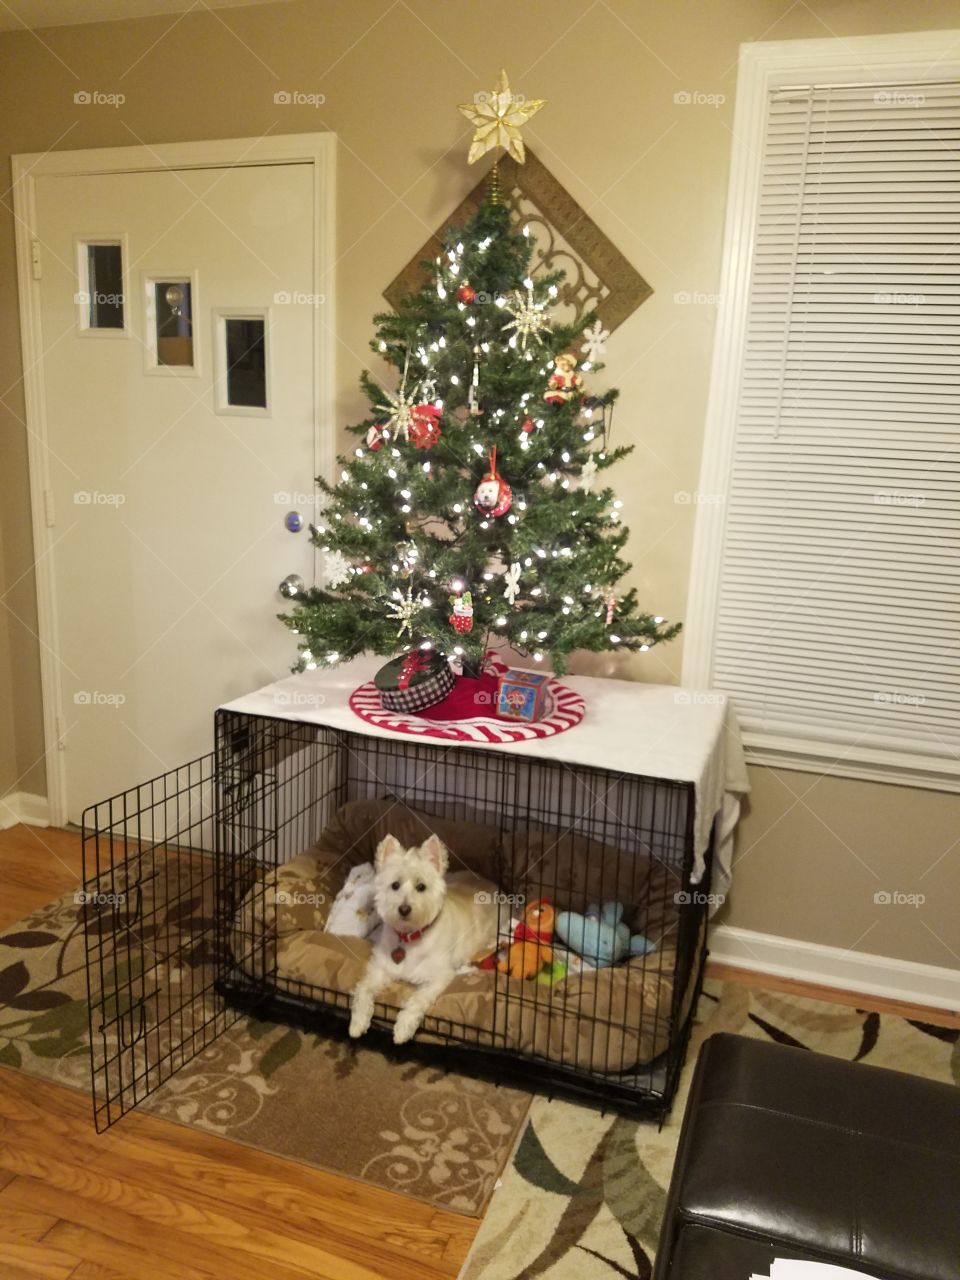 cute Christmas dog posing under the tree